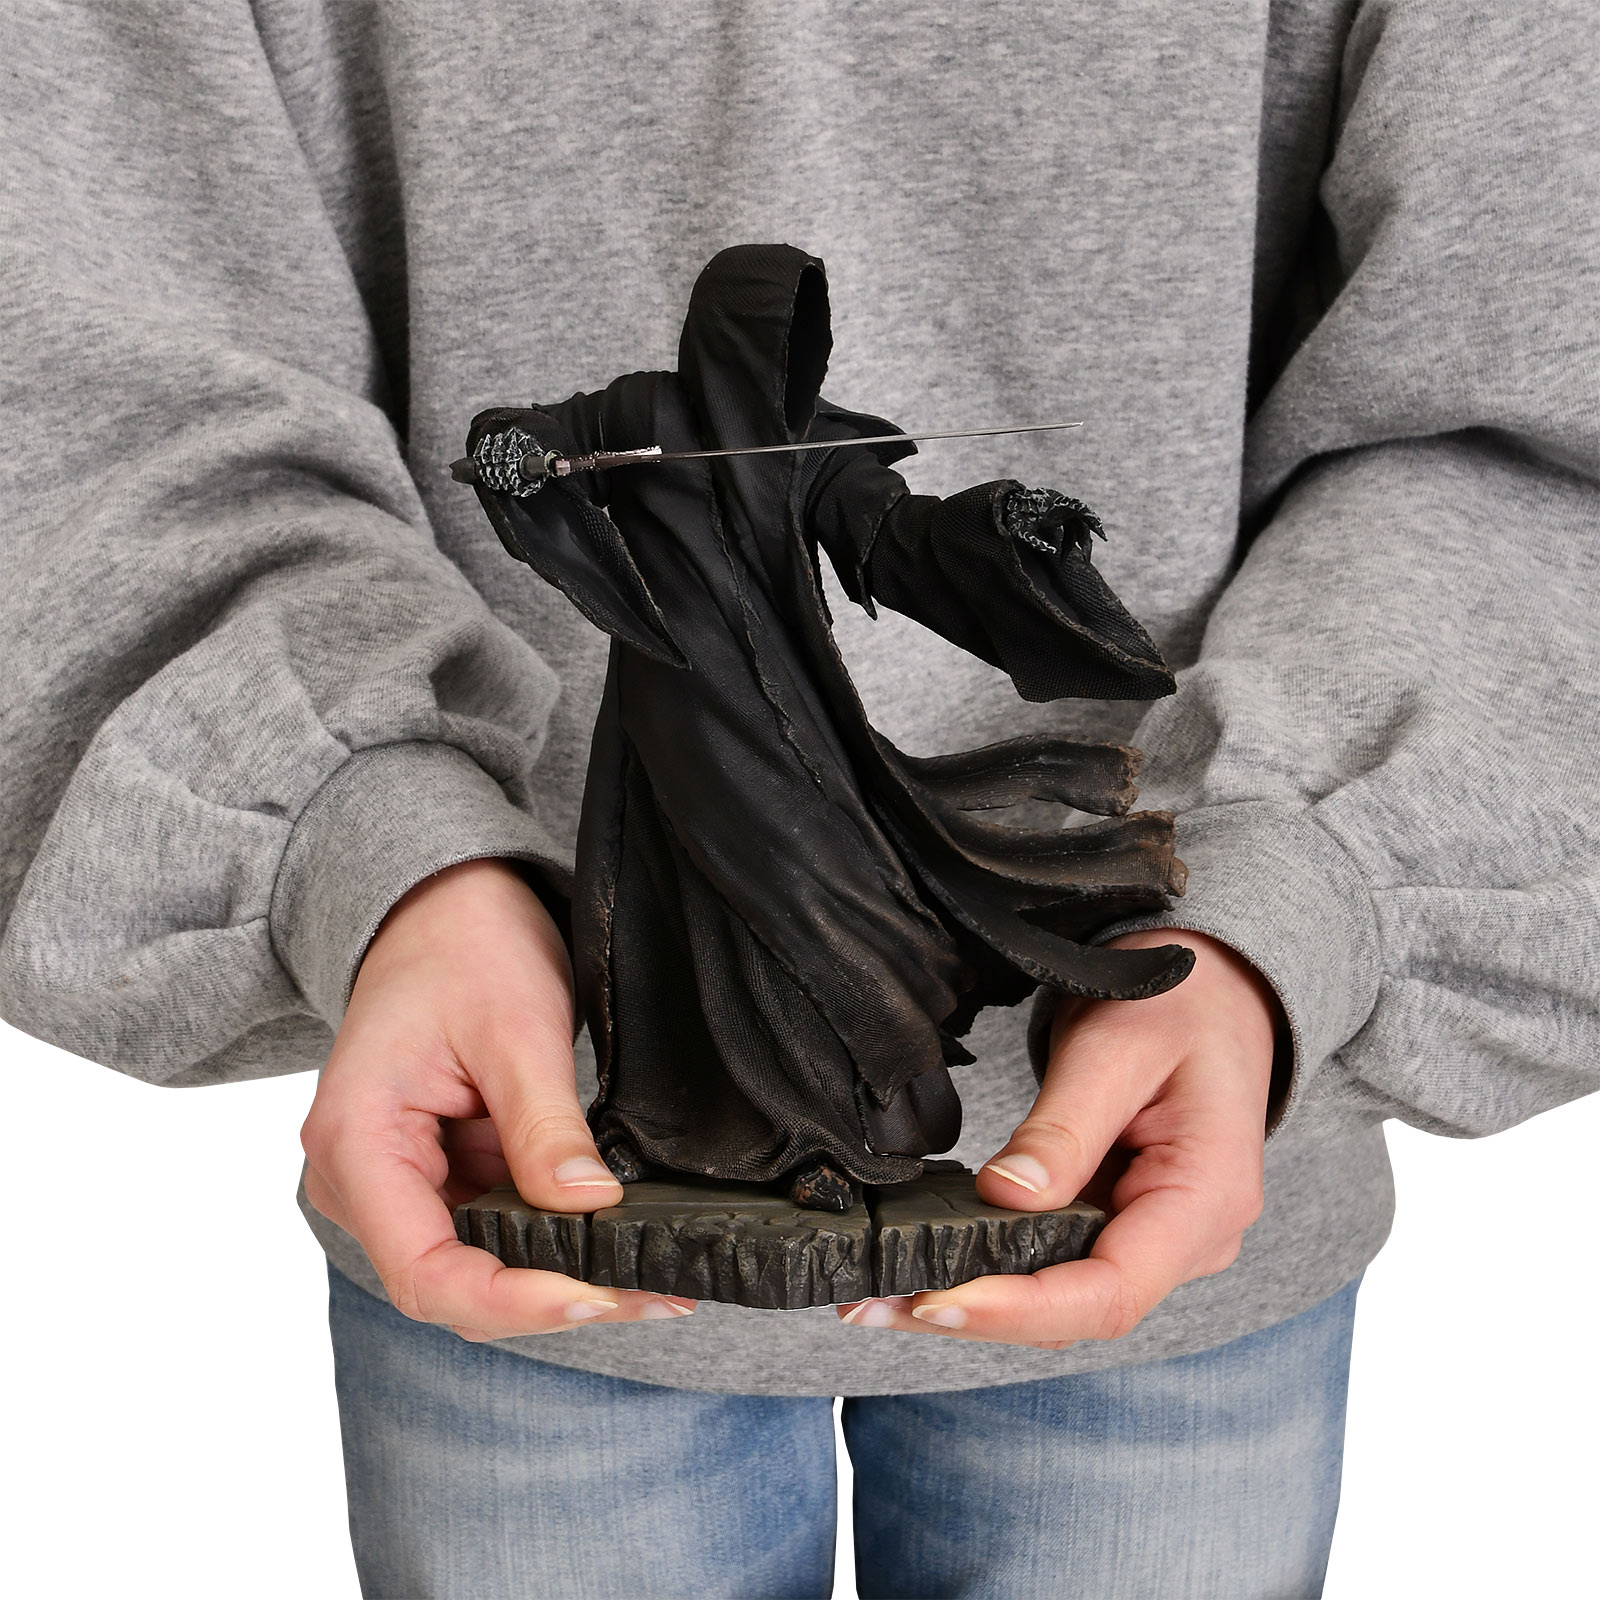 Herr der Ringe - Attacking Nazgul BDS Art Scale Deluxe Statue 22 cm